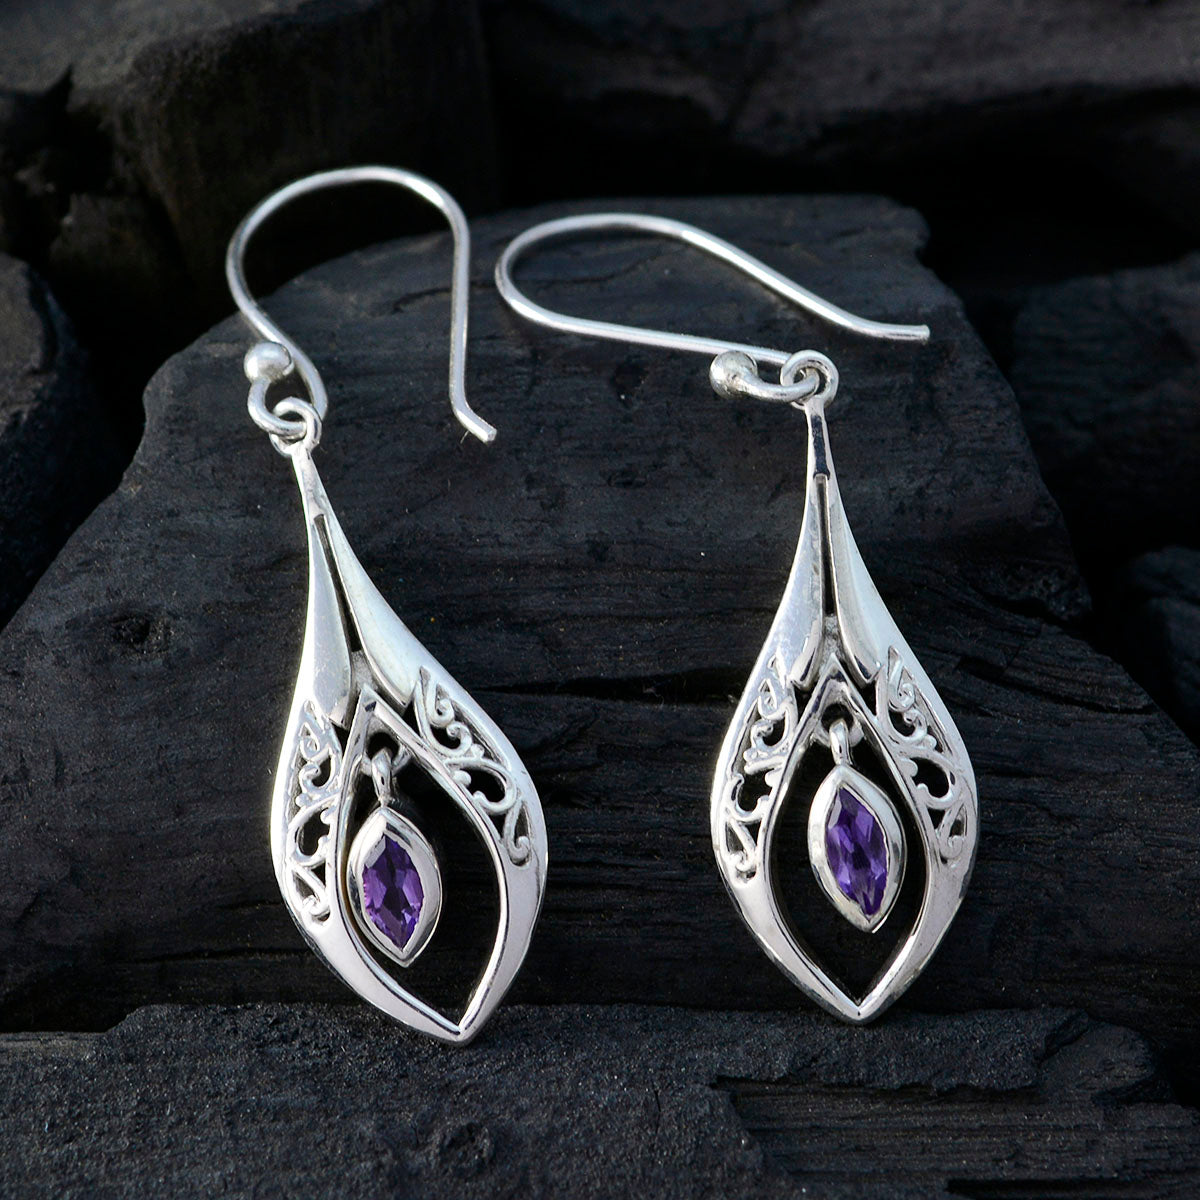 Riyo Genuine Gems Marquise Faceted Purple Amethyst Silver Earrings gift for friend